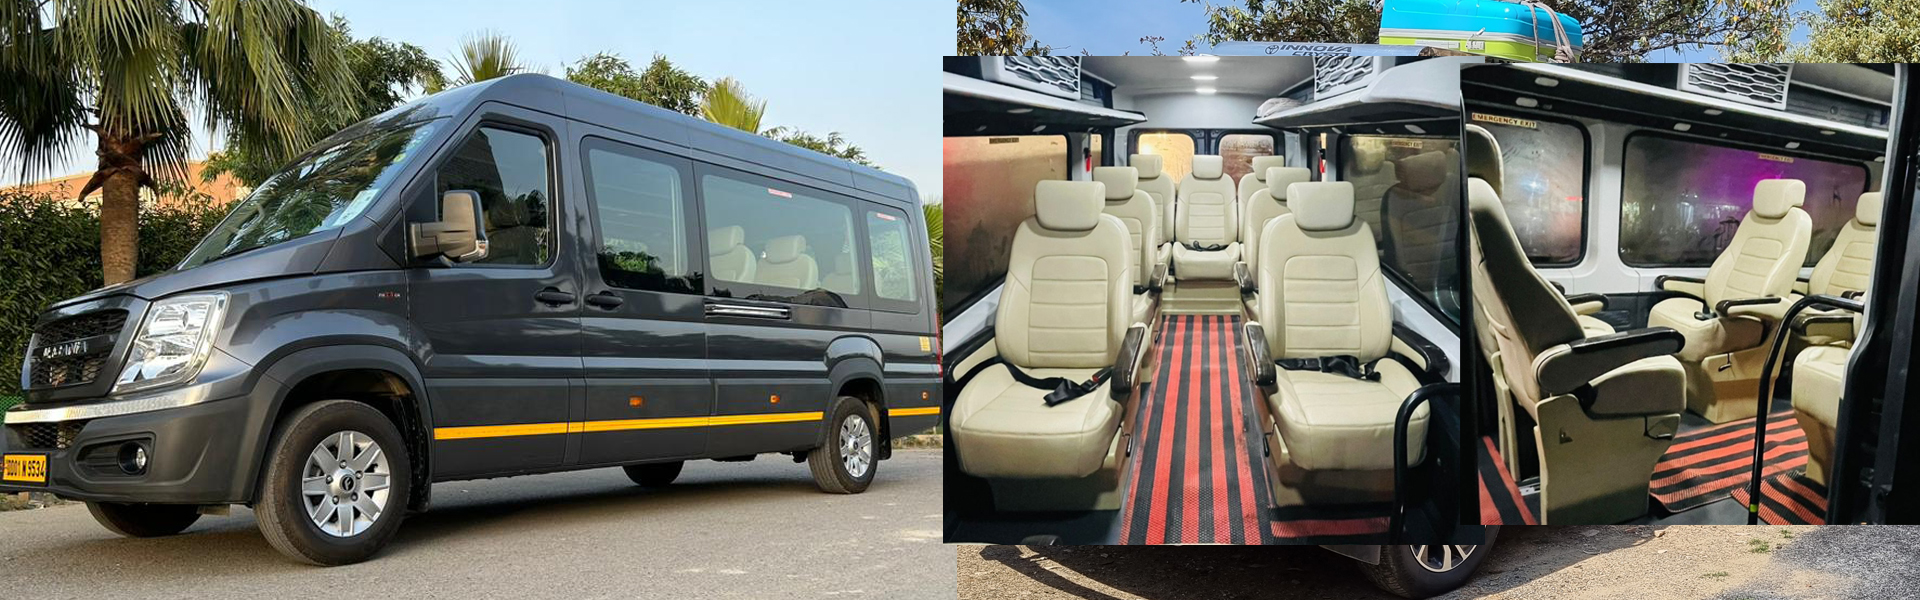 shimla manali tour package by innova crysta car